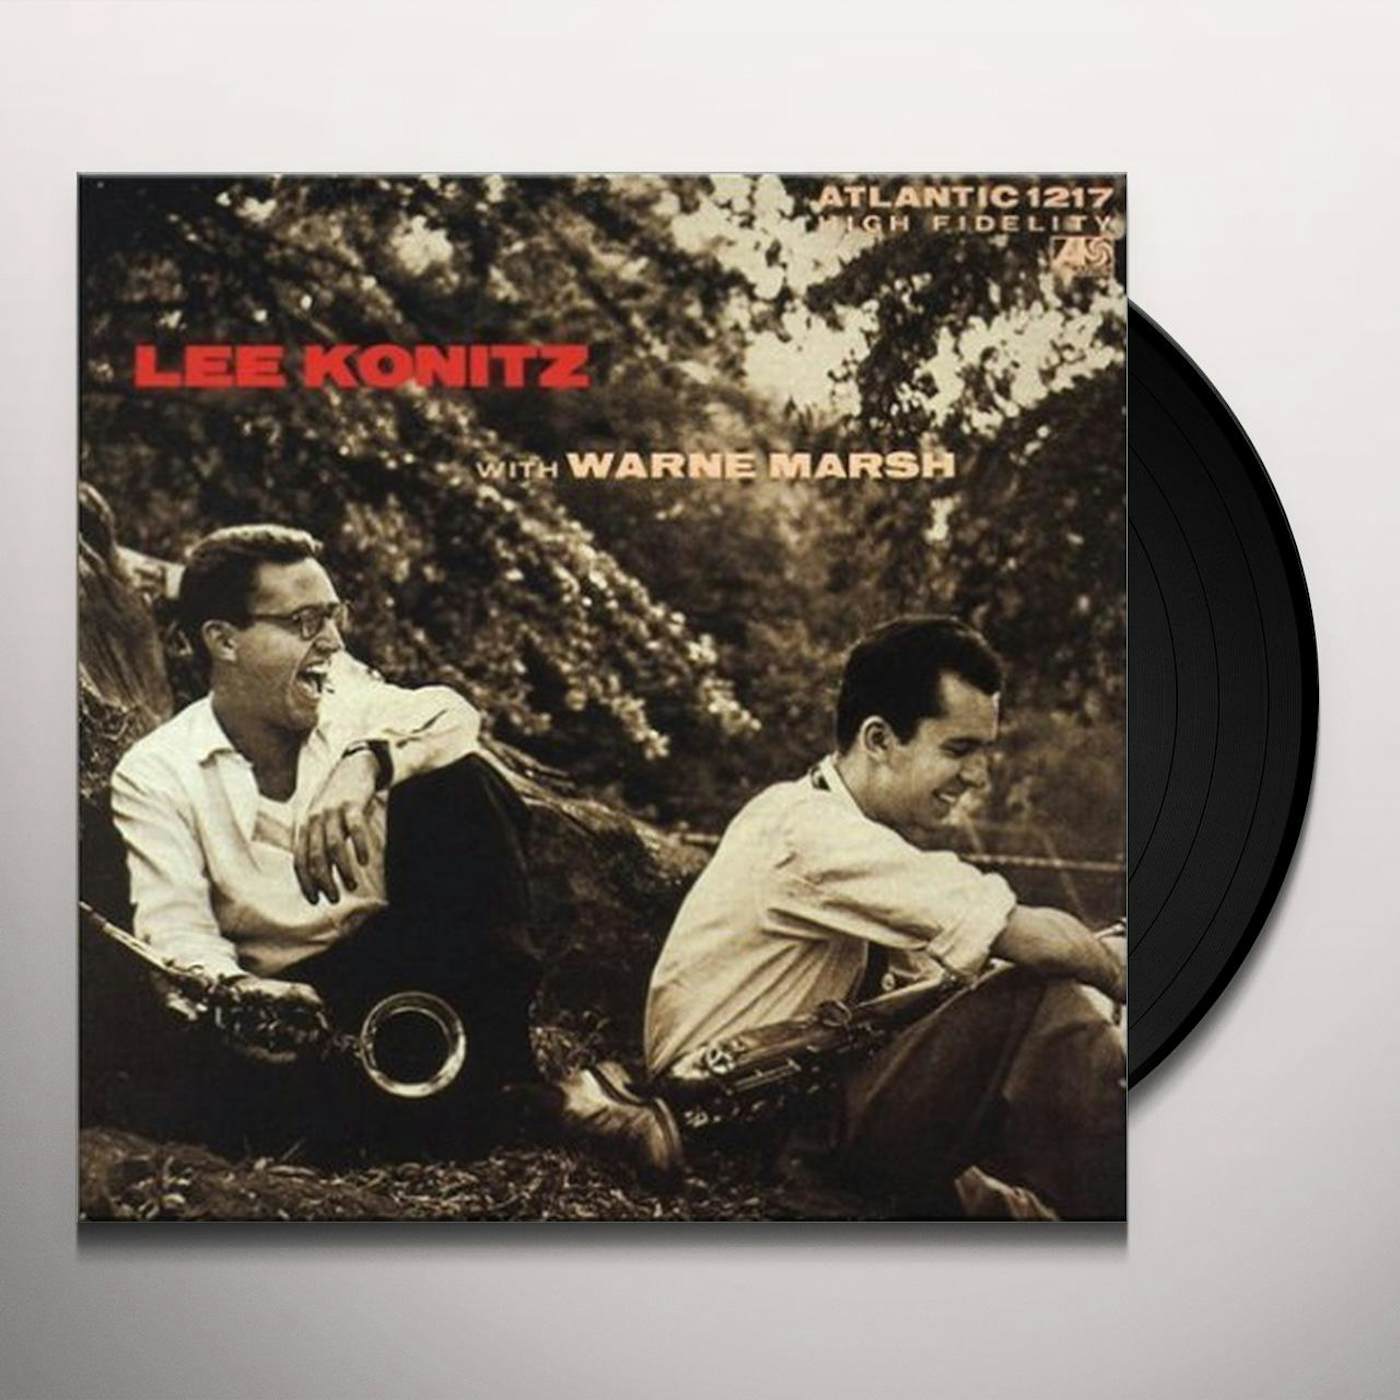 Lee Konitz & Warne Marsh LEE KONITZ WITH WARNE MARSH (BONUS TRACK) Vinyl Record - 180 Gram Pressing